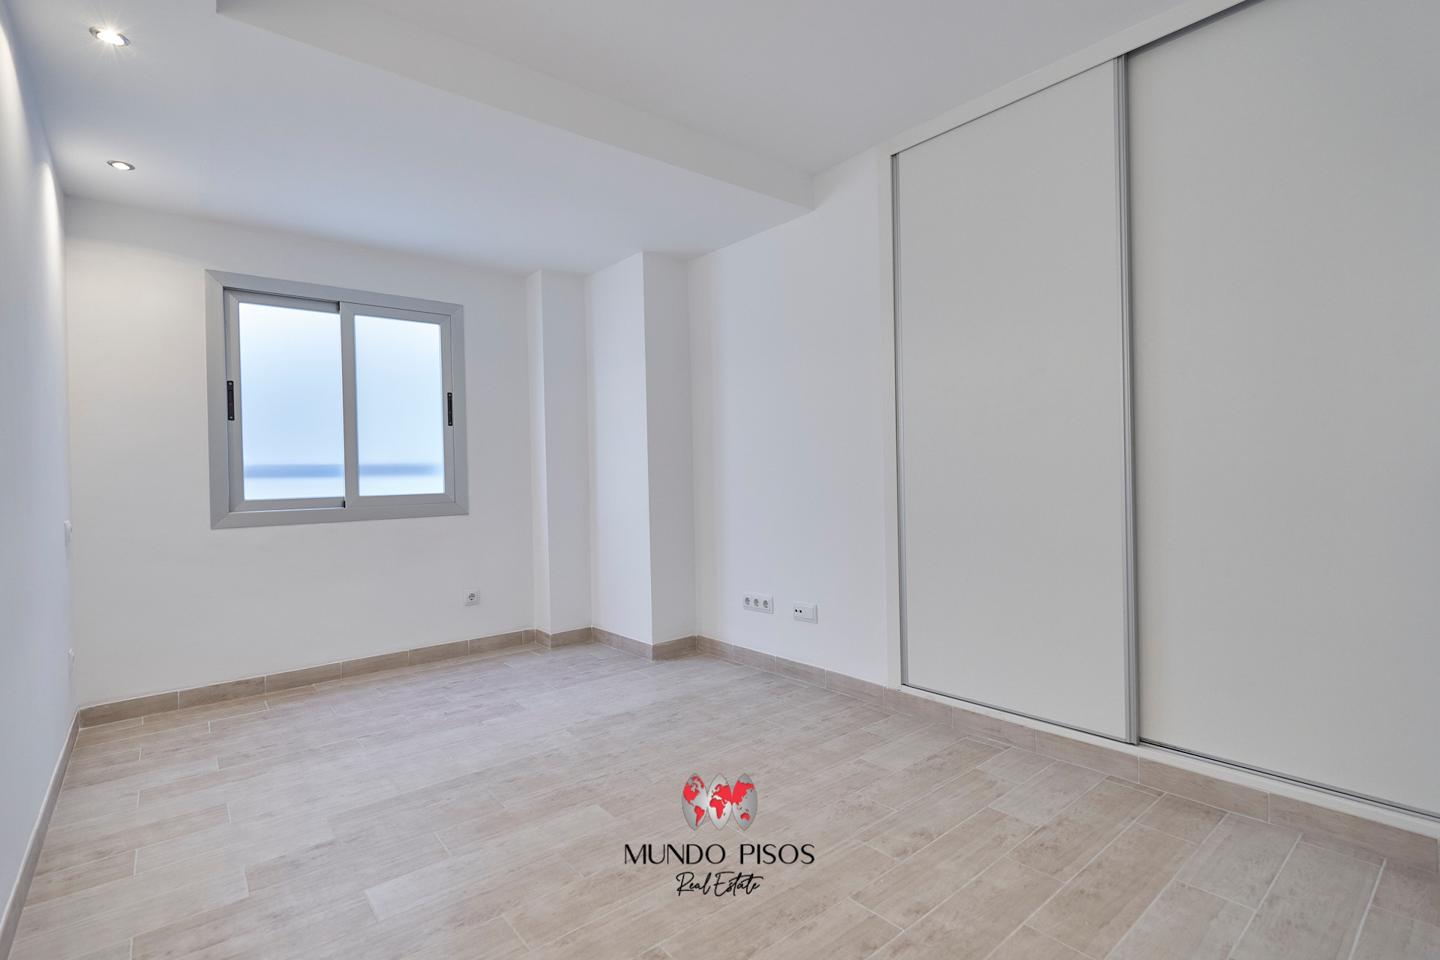 Exclusive apartment in the center of Palma, Palma de Mallorca, Balearic Islands.